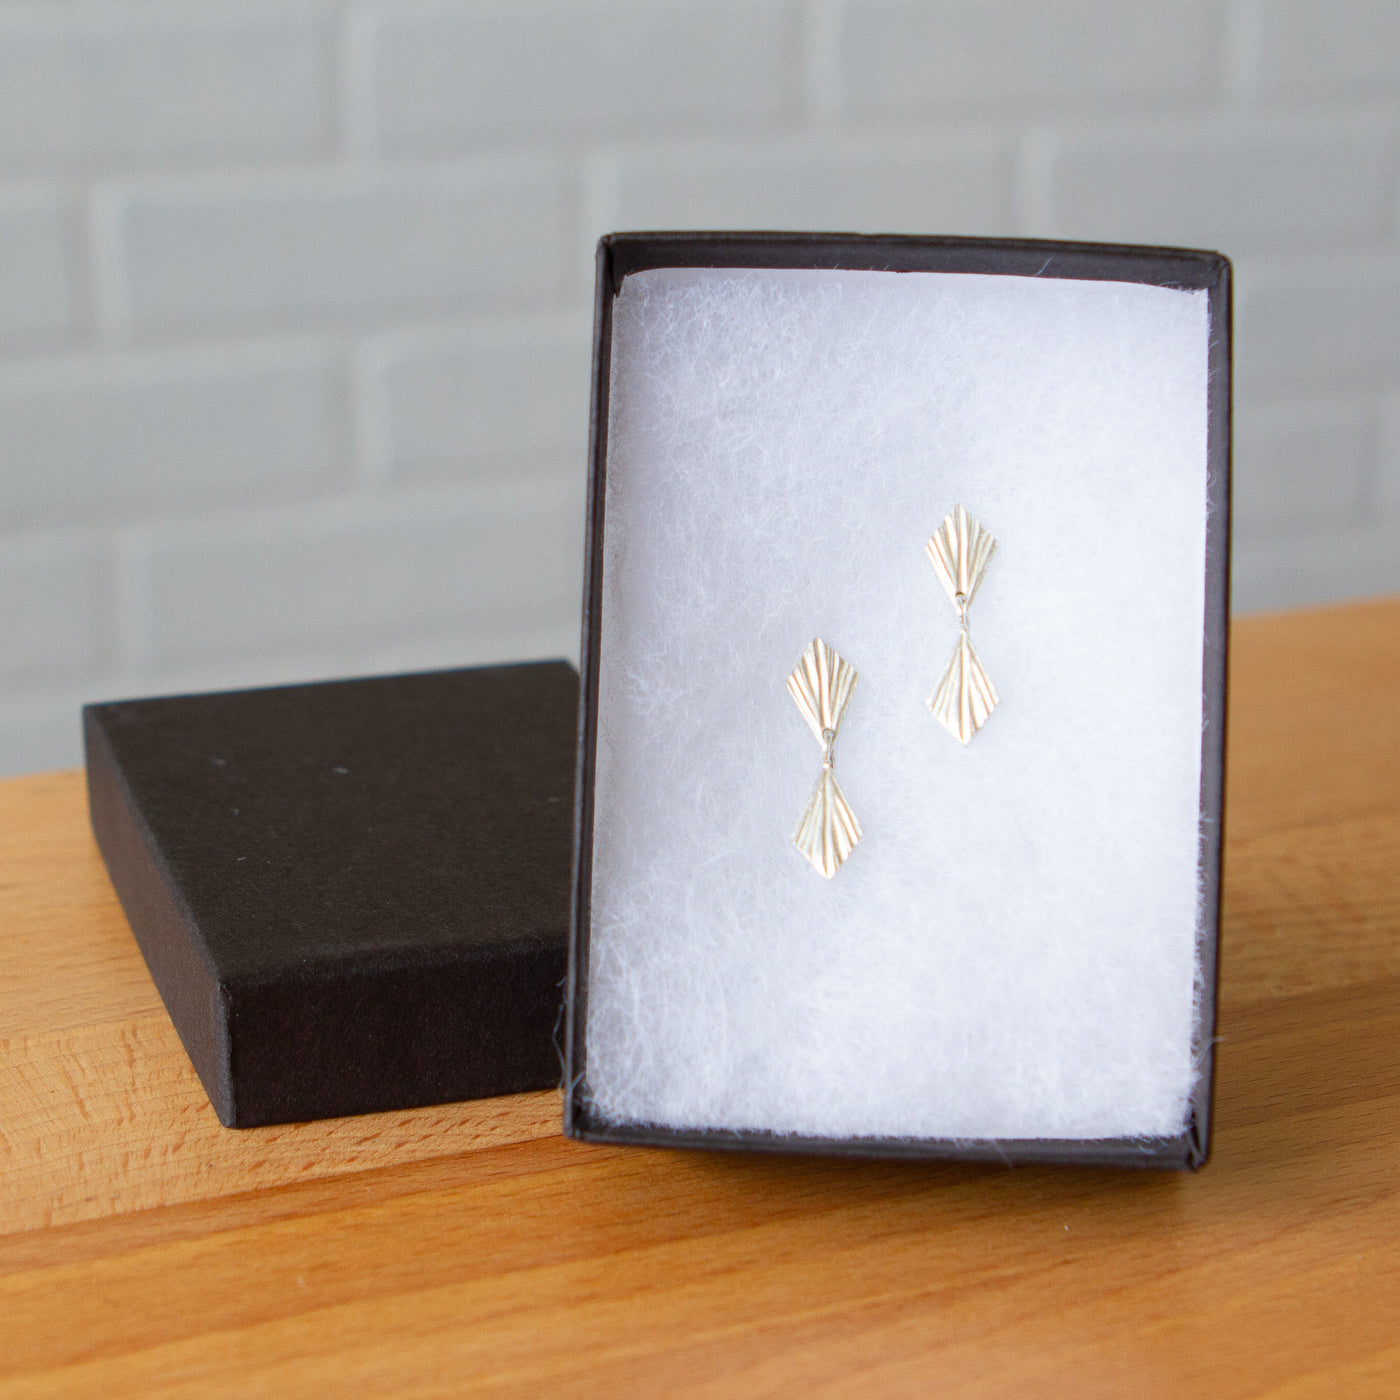 Double Flame Silver Dangle Earrings in a gift box